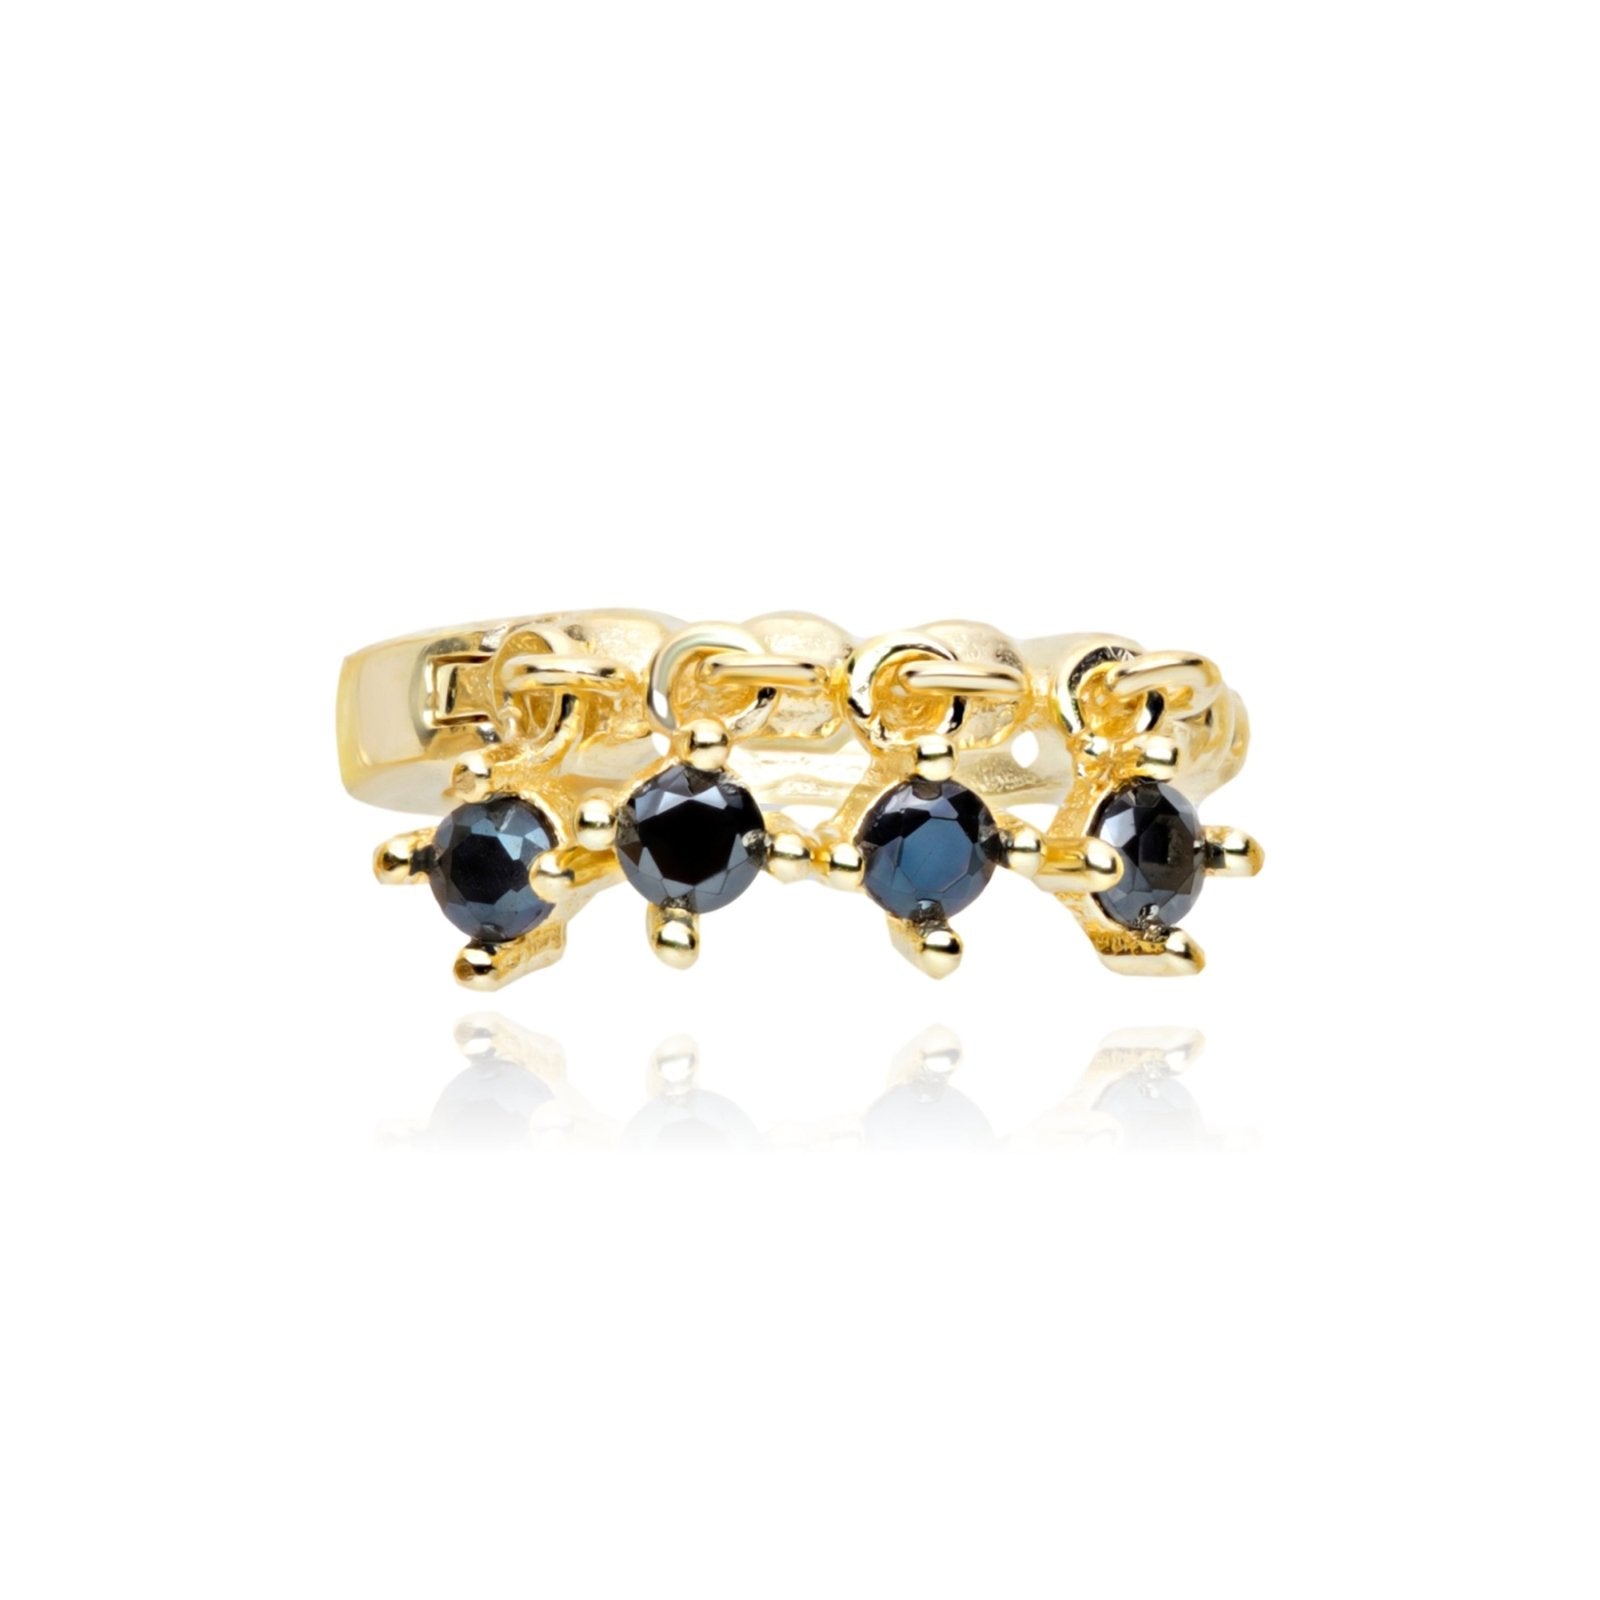 Black Onyx Bezel Drop Charm Hoops Earrings Estella Collection #product_description# 14k Black Gemstone Black Onyx #tag4# #tag5# #tag6# #tag7# #tag8# #tag9# #tag10#